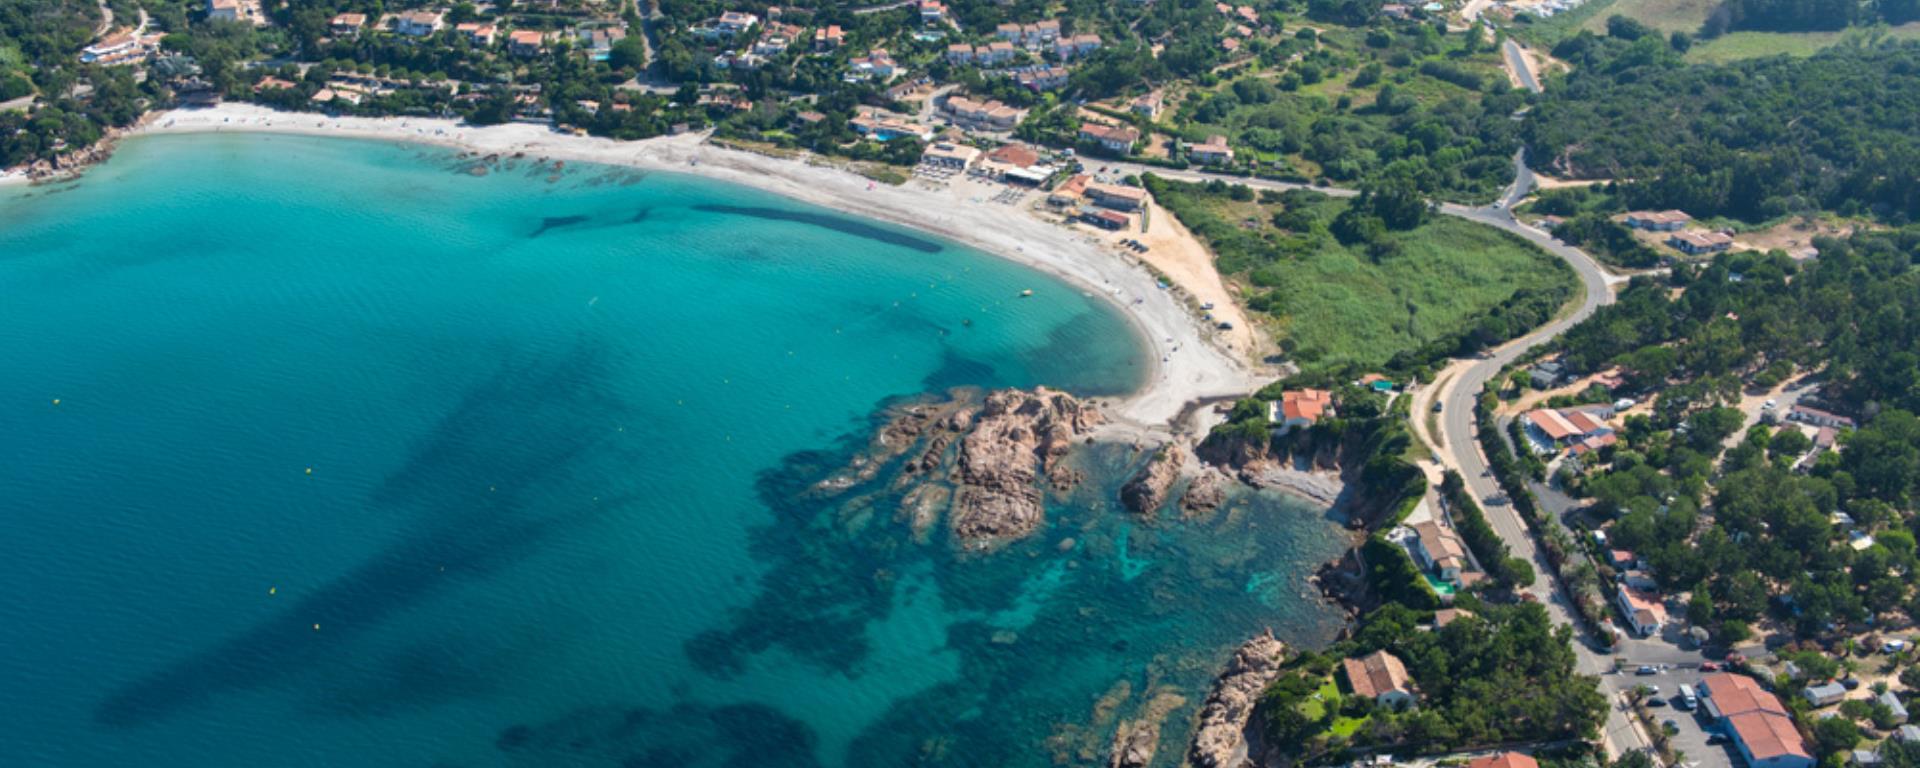 2022- plage Ruppione site internet office de tourisme Pieve Ornano